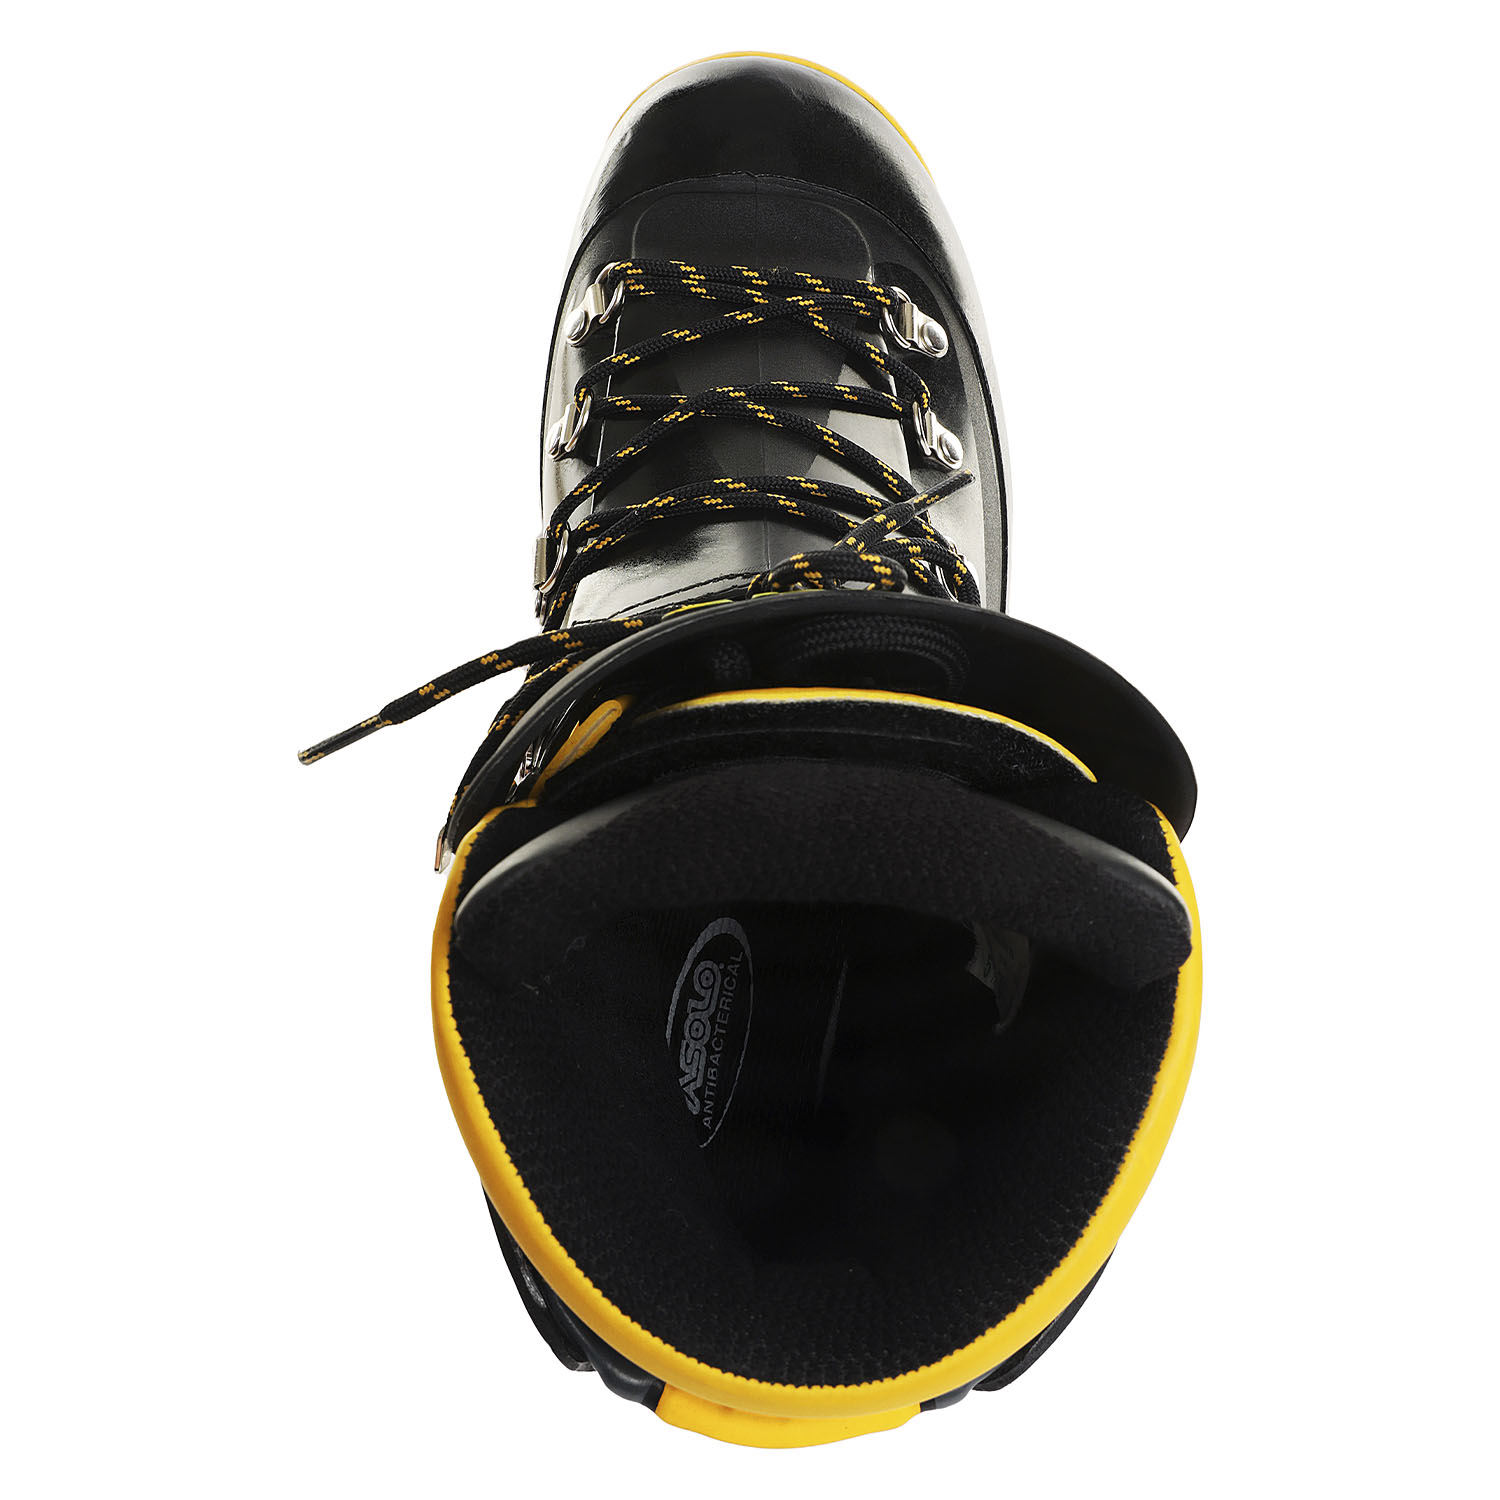 Ботинки Asolo Alpine AFS 8000 Evo Black/Yellow